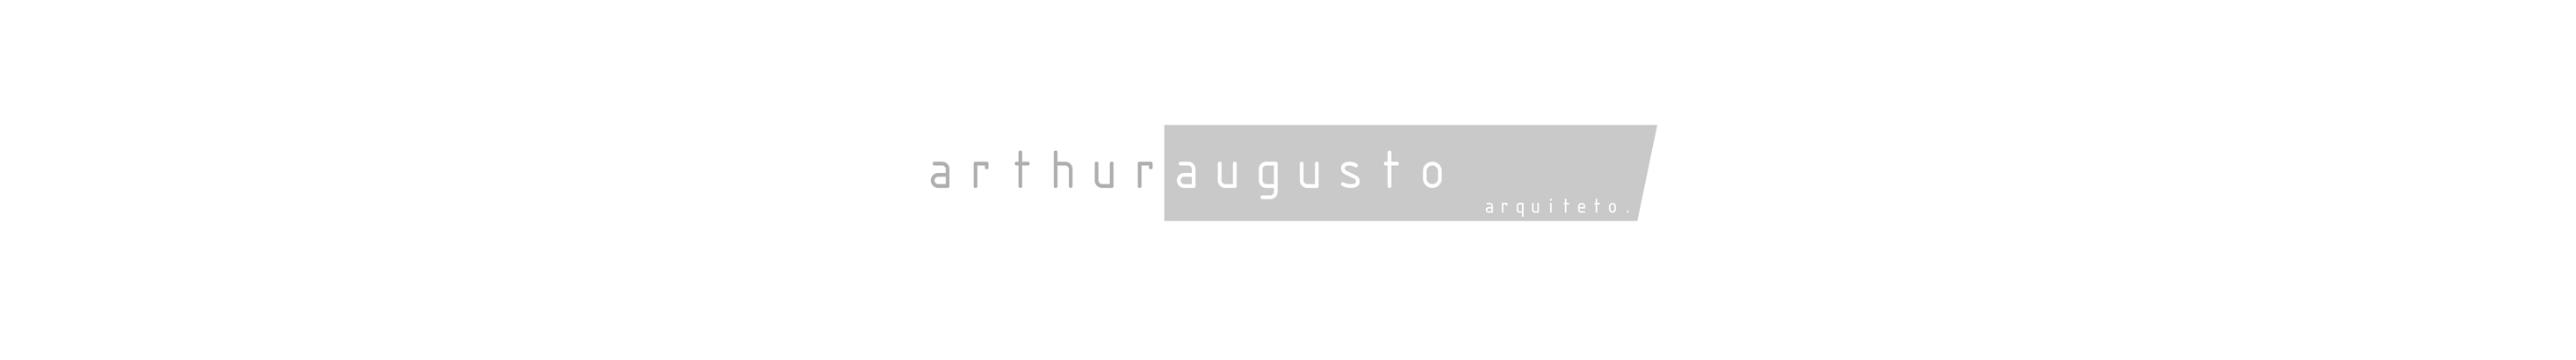 Arthur Augusto Arquiteto のプロファイルバナー